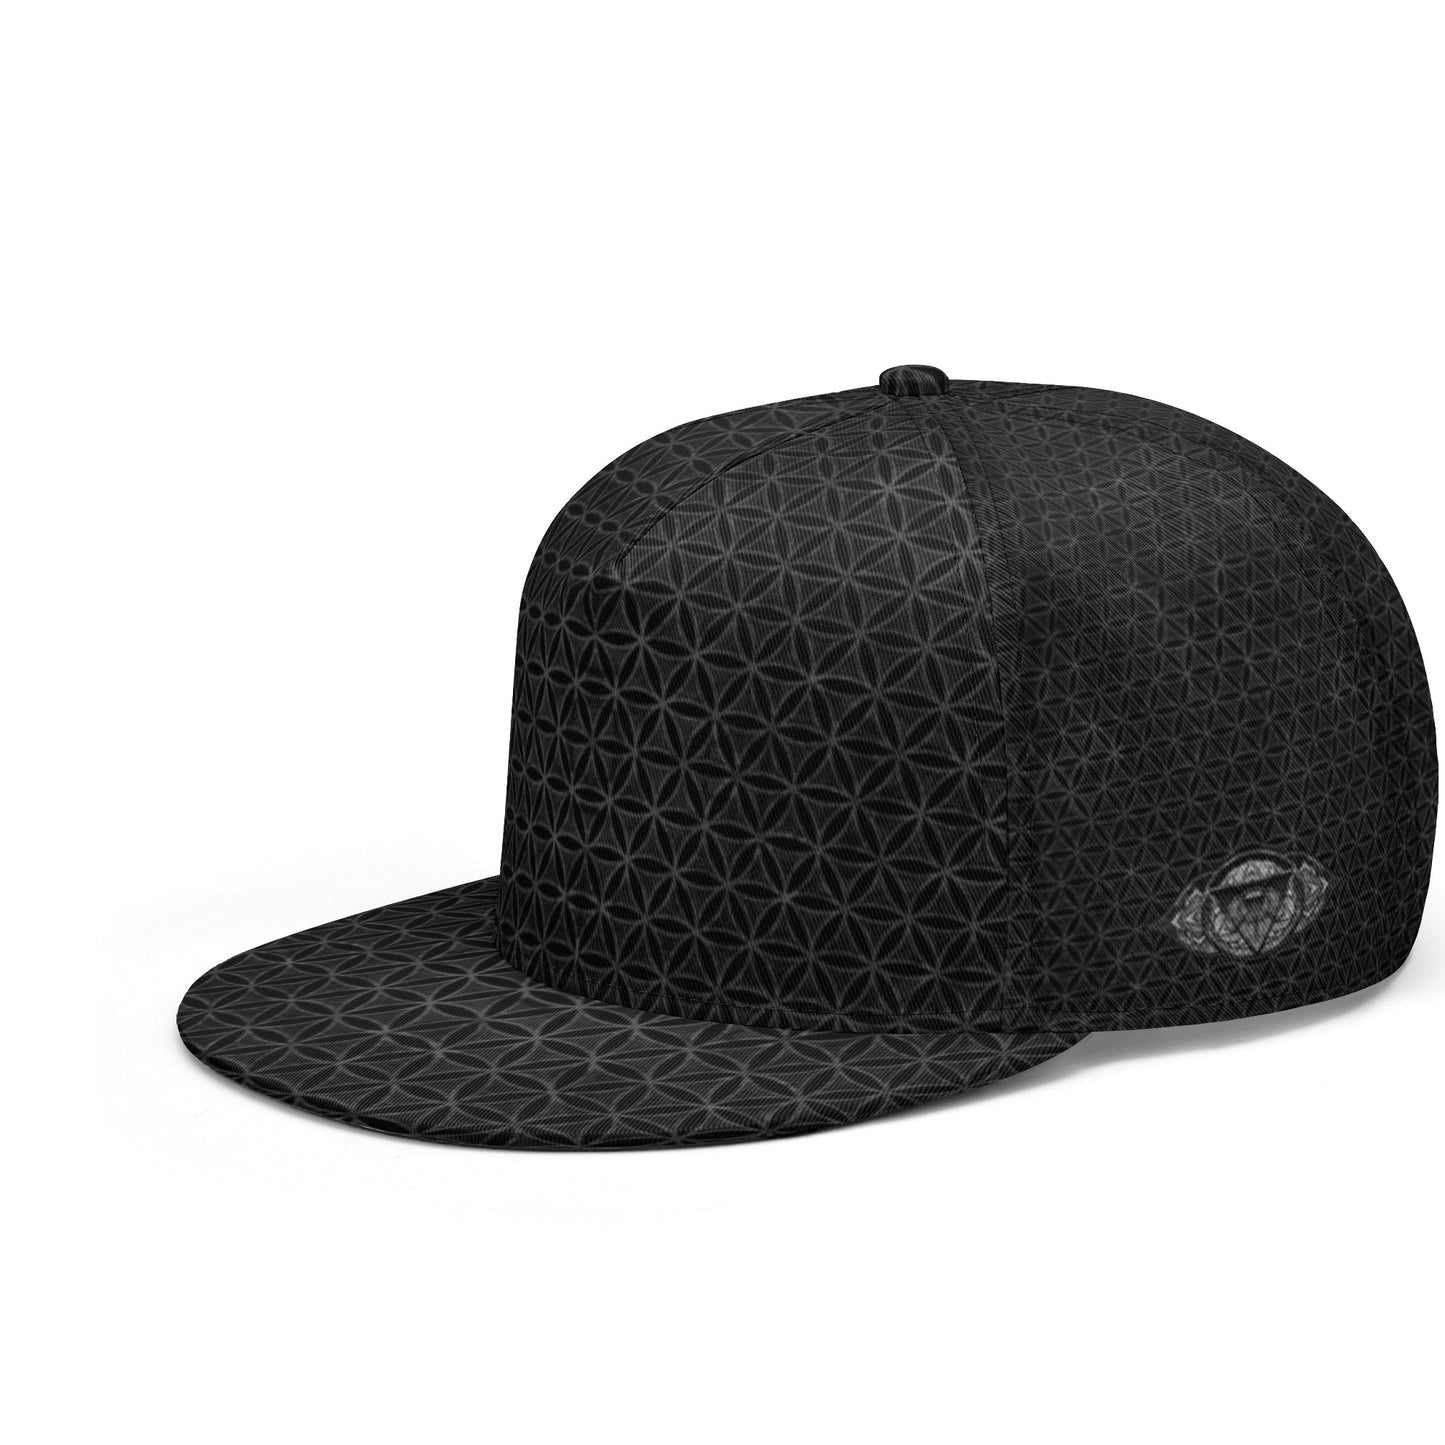 Black Flower of Life Snapback Hat